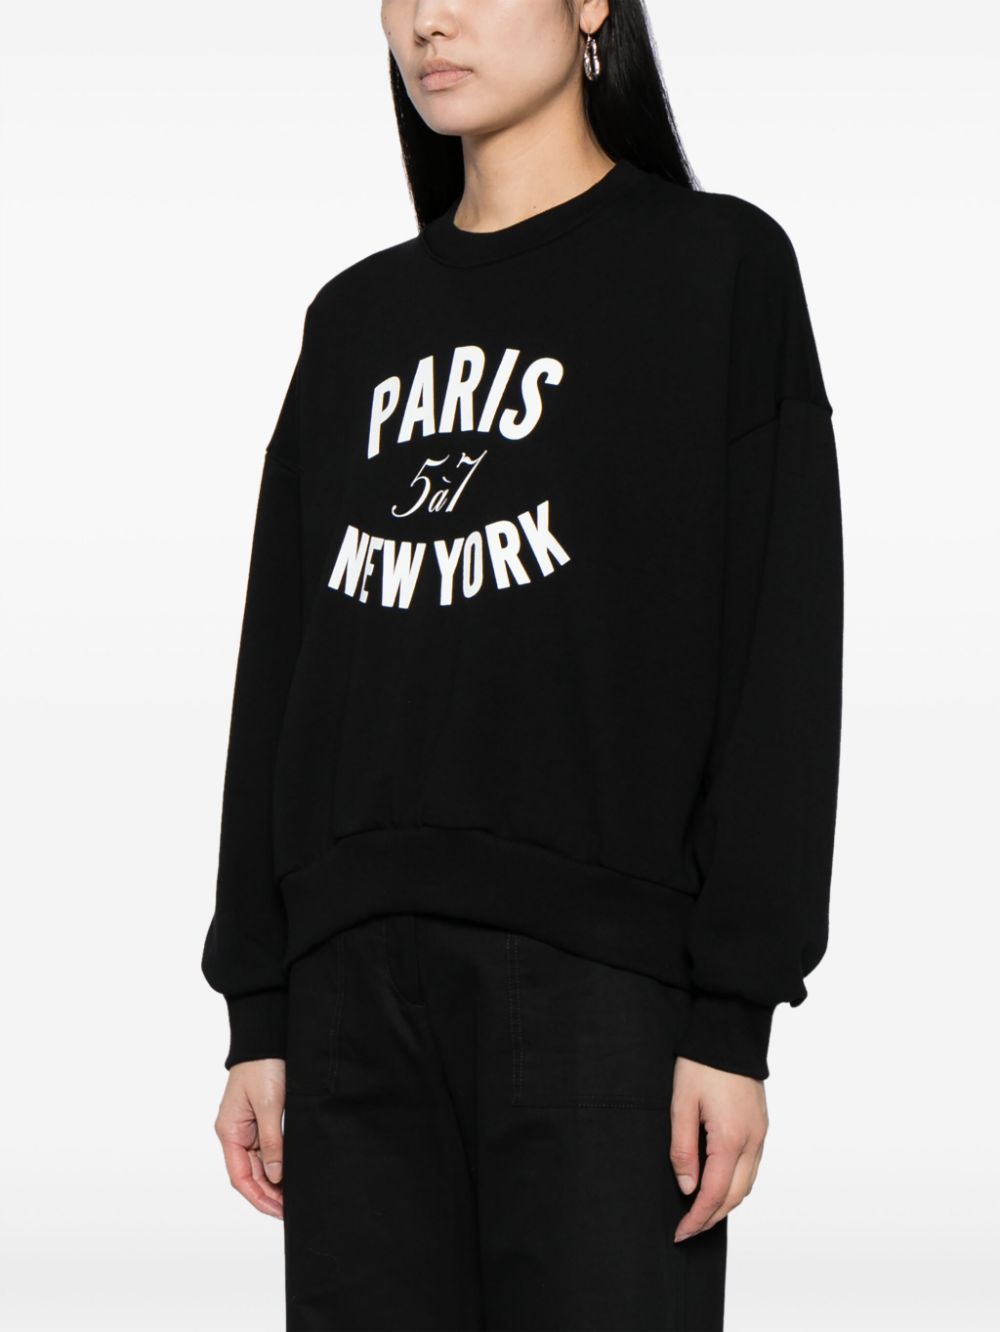 BRANDY PARIS NEW YORK 卫衣